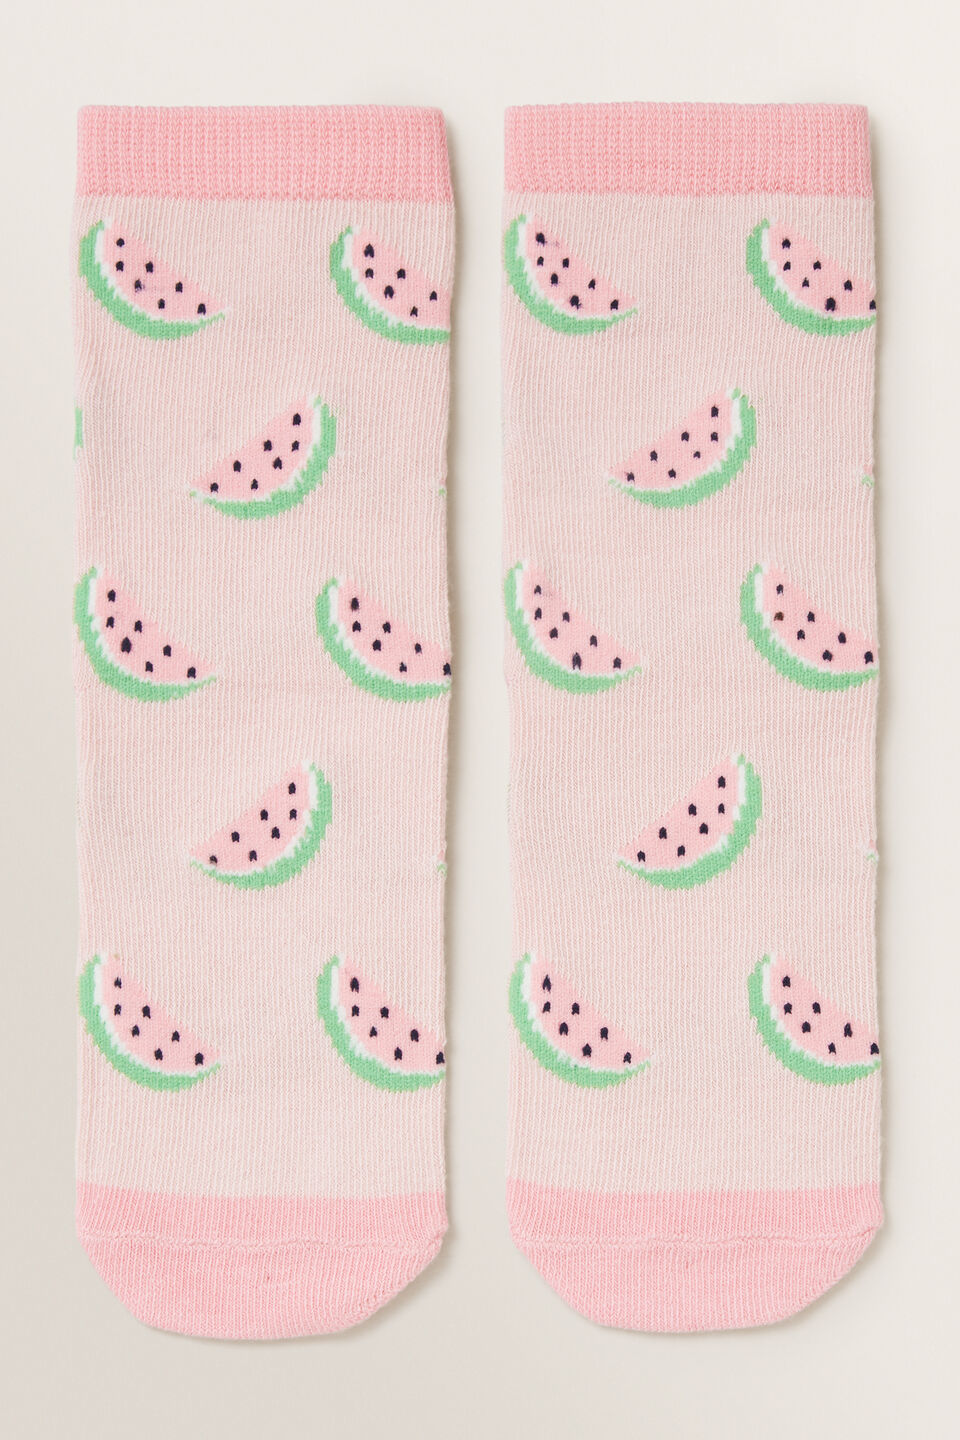 Watermelon Socks  Multi